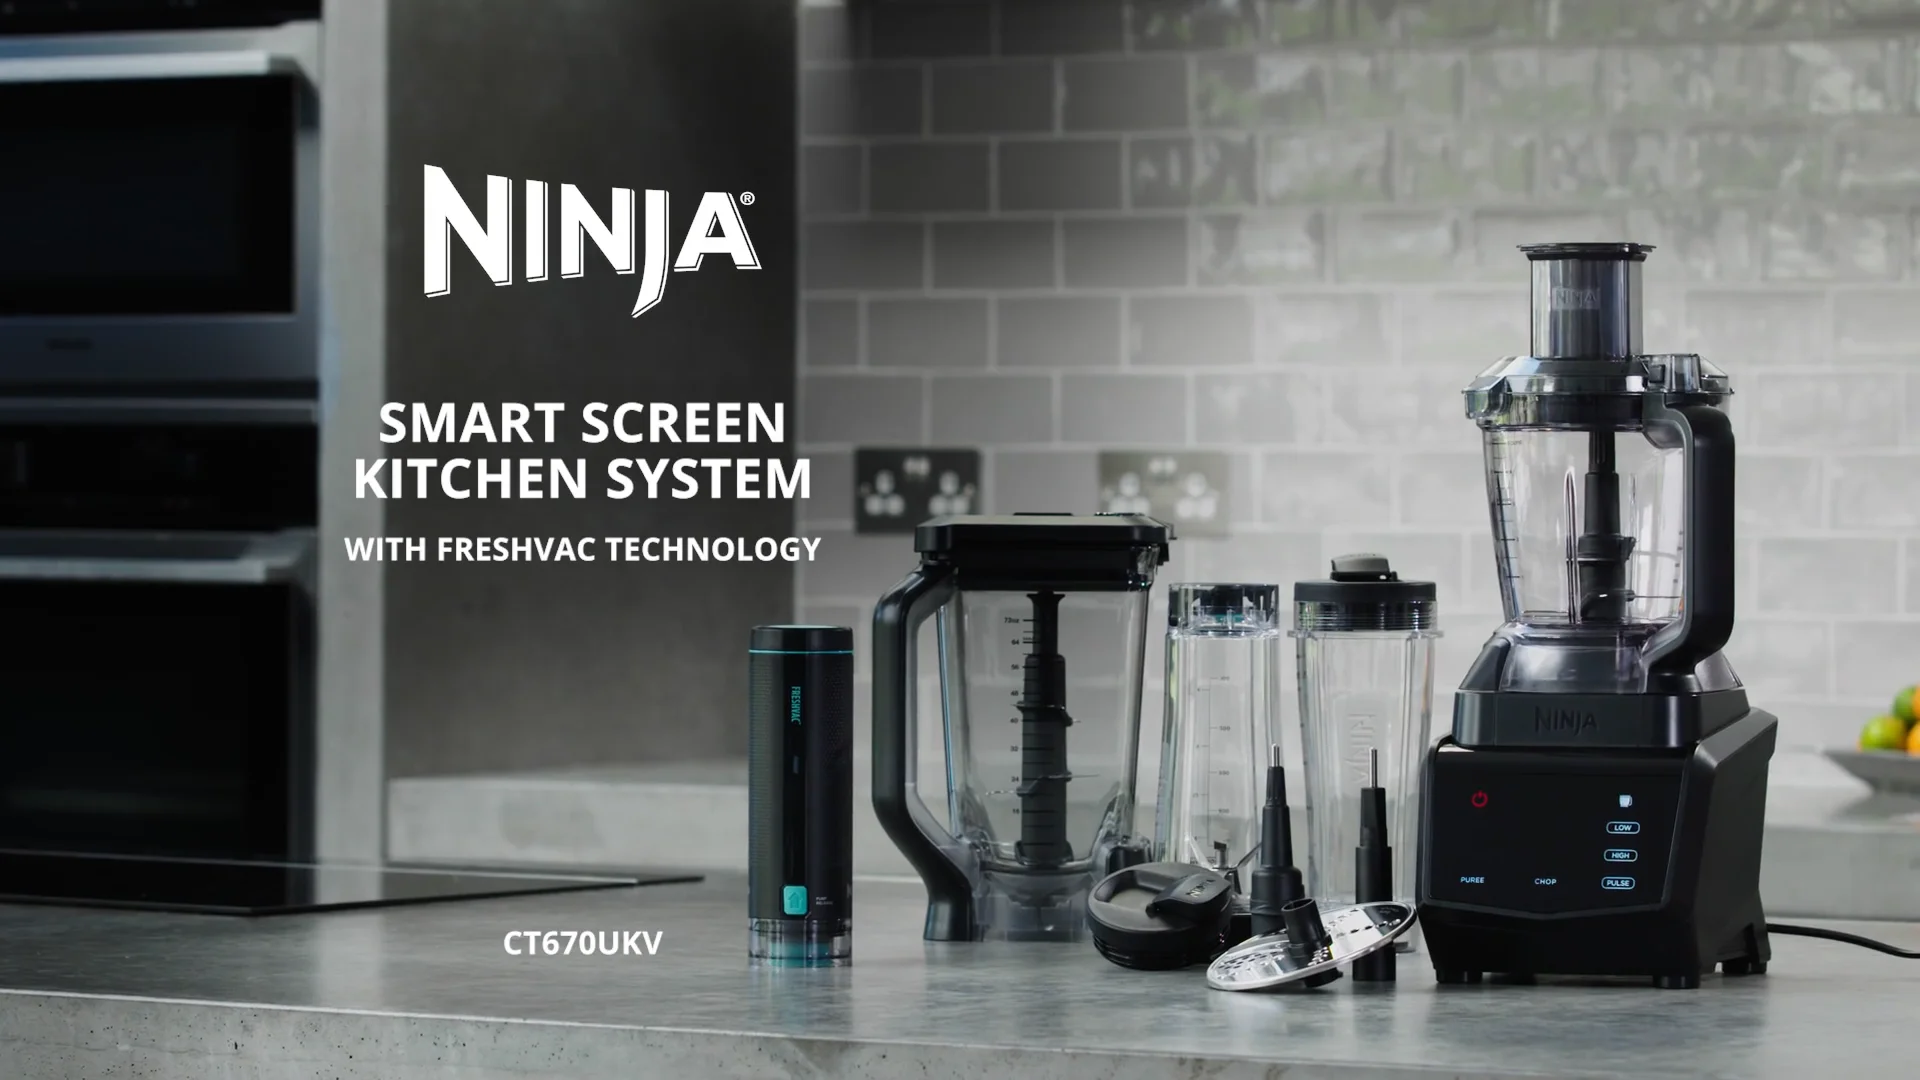 Ninja Smart Screen Kitchen System with FreshVac Technology